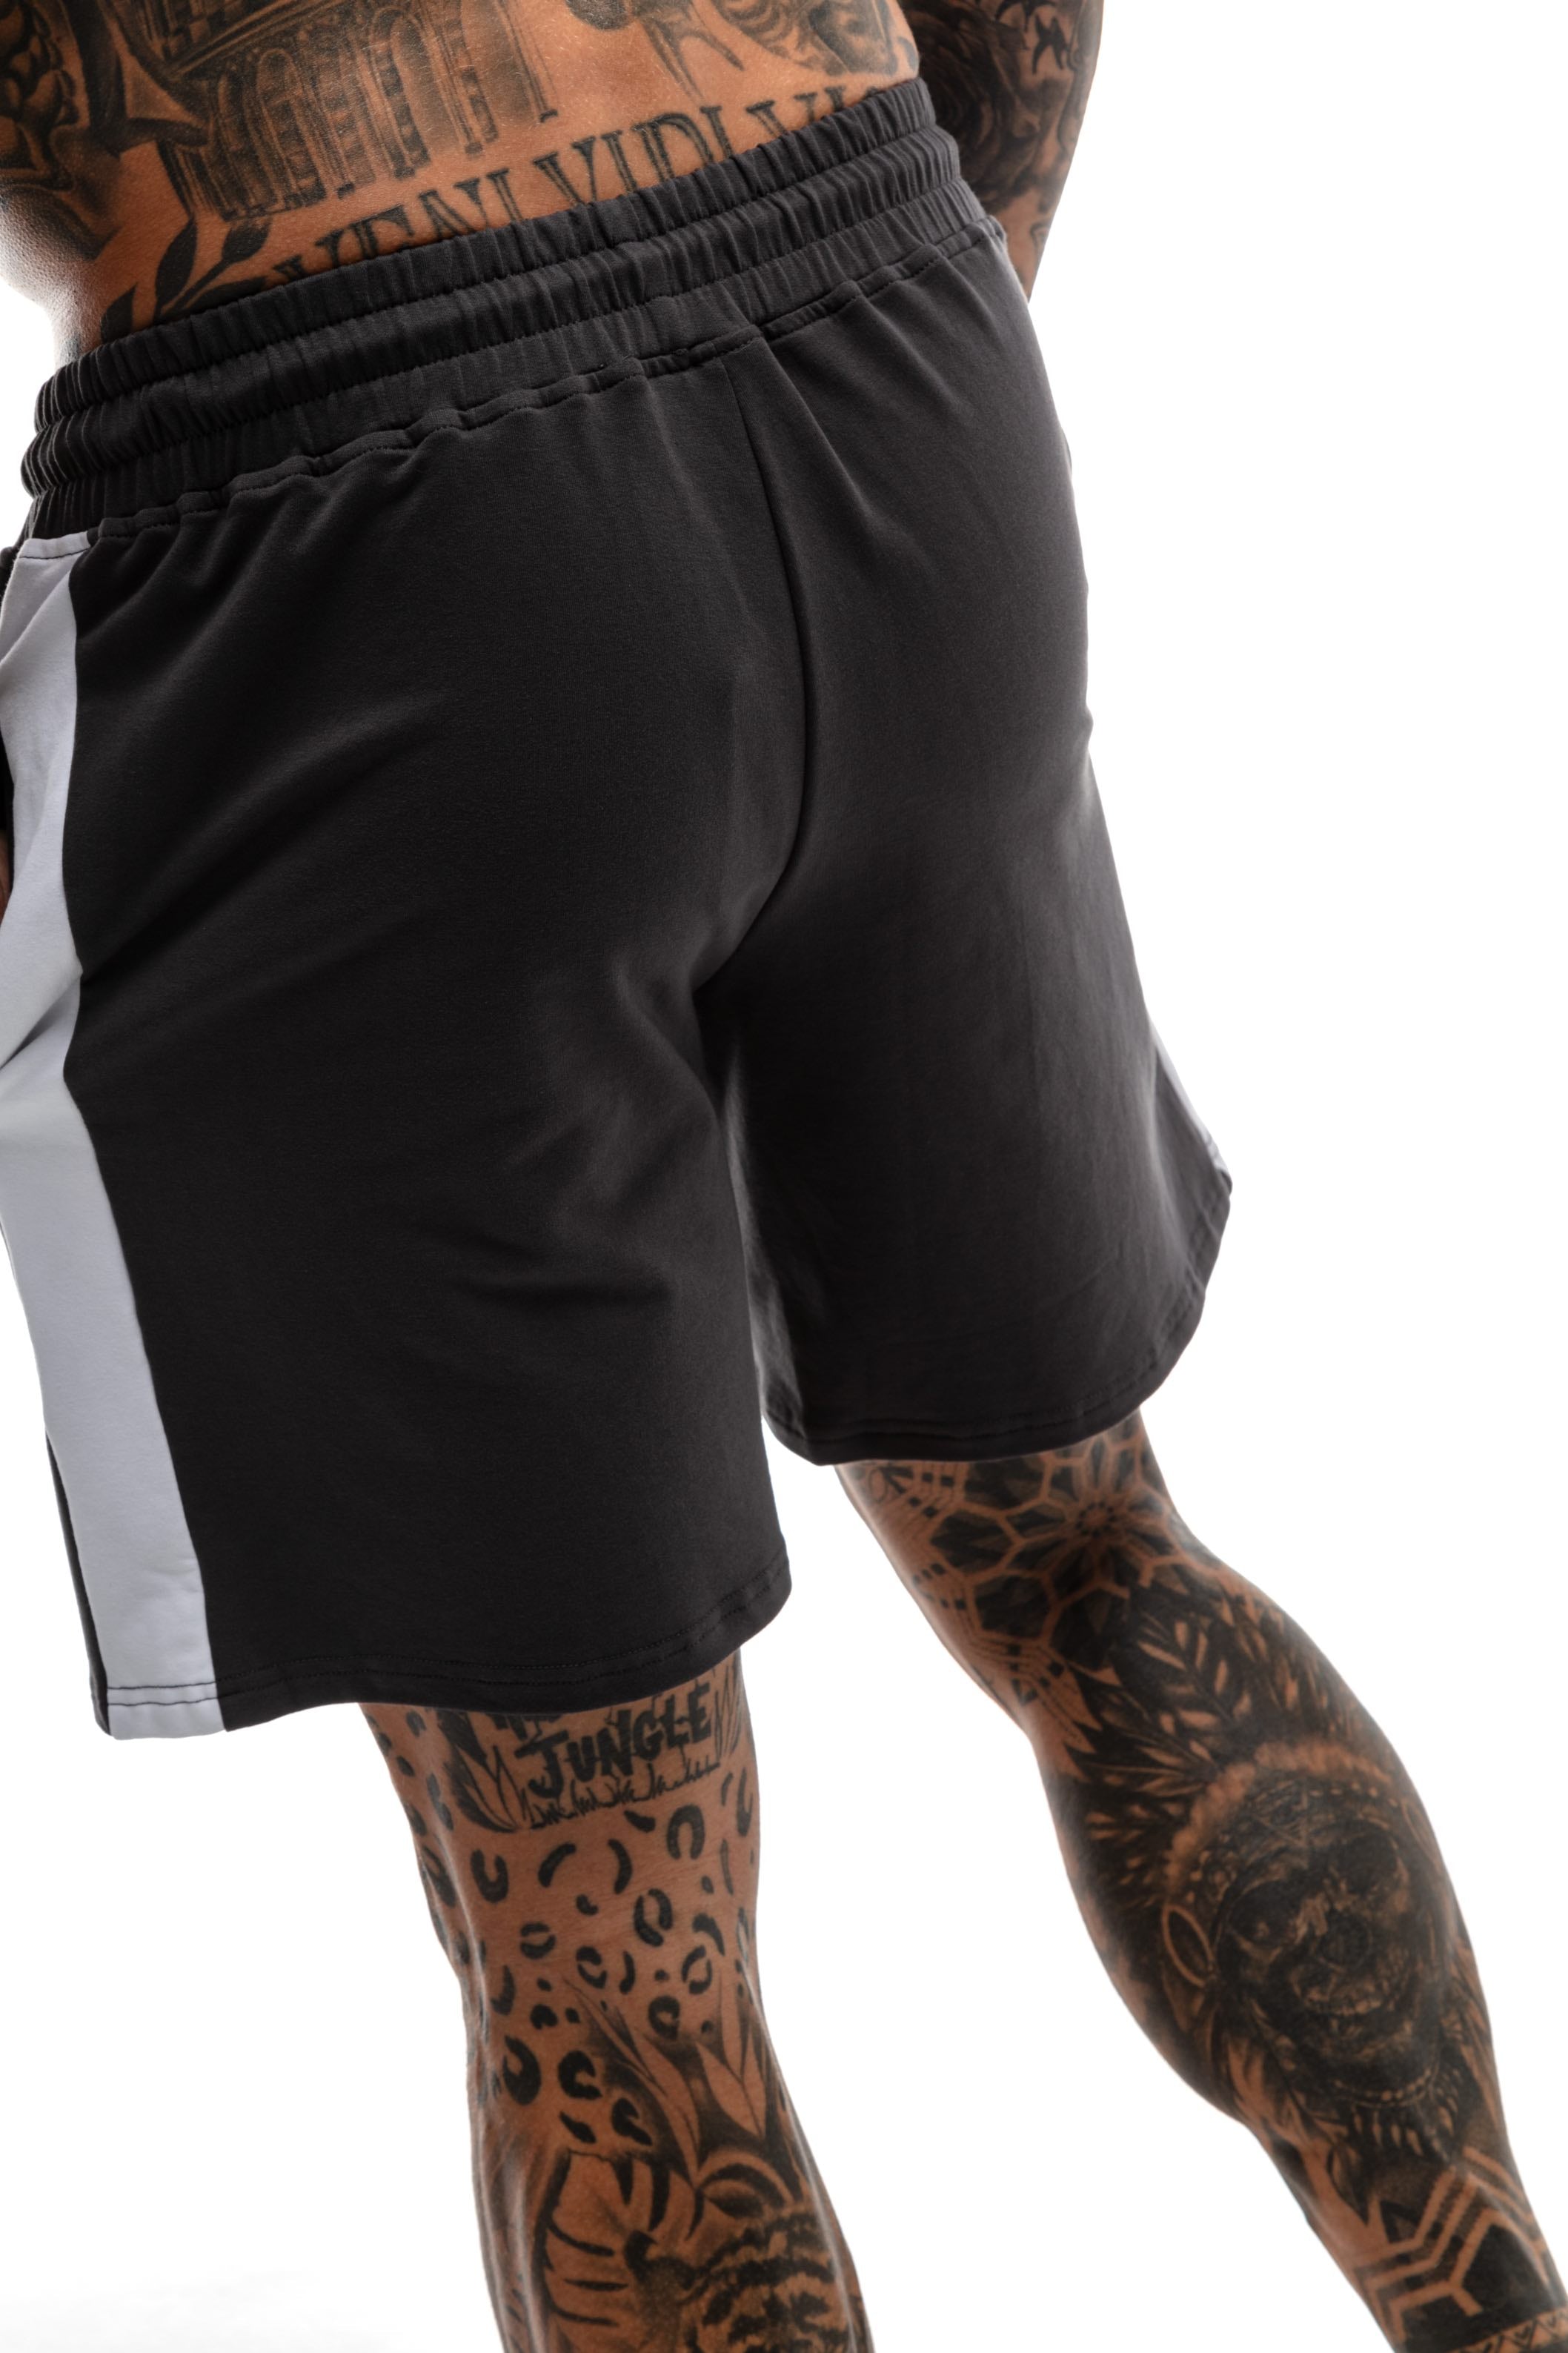 GymFreak Mens Icon Range Shorts - Charcoal - 7 inch